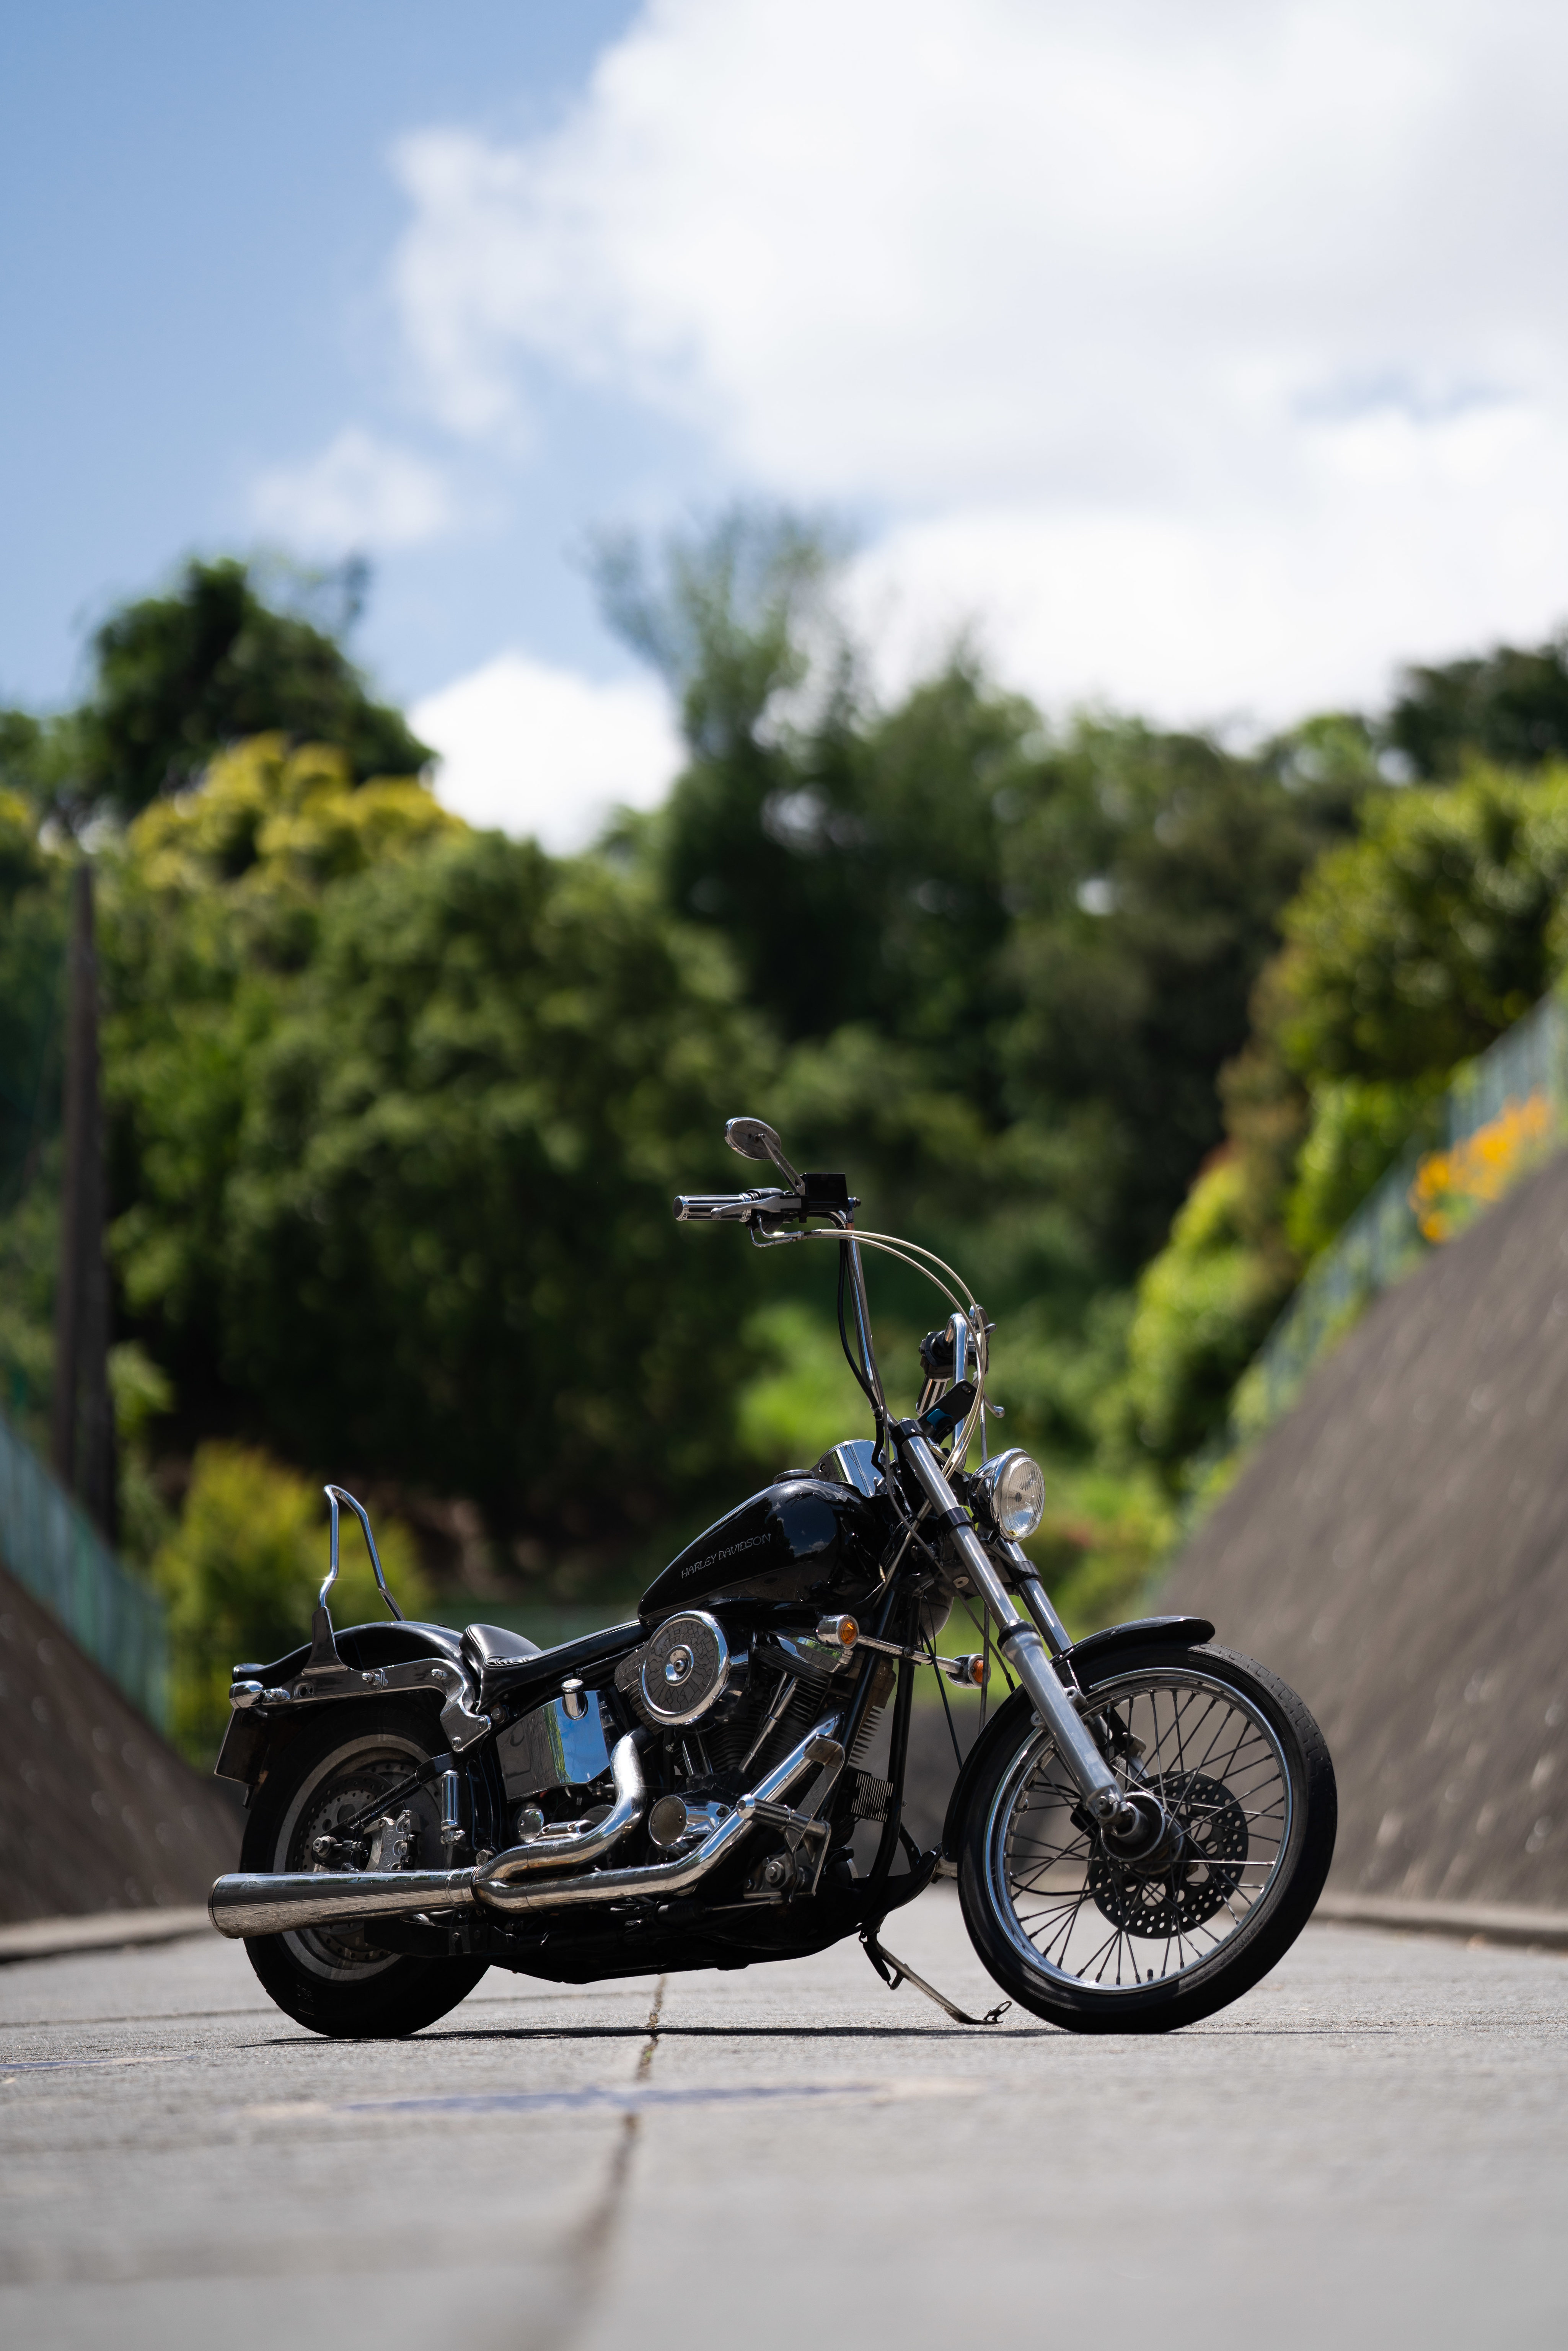 harley davidson, bike, motorcycles, side view, motorcycle 2160p